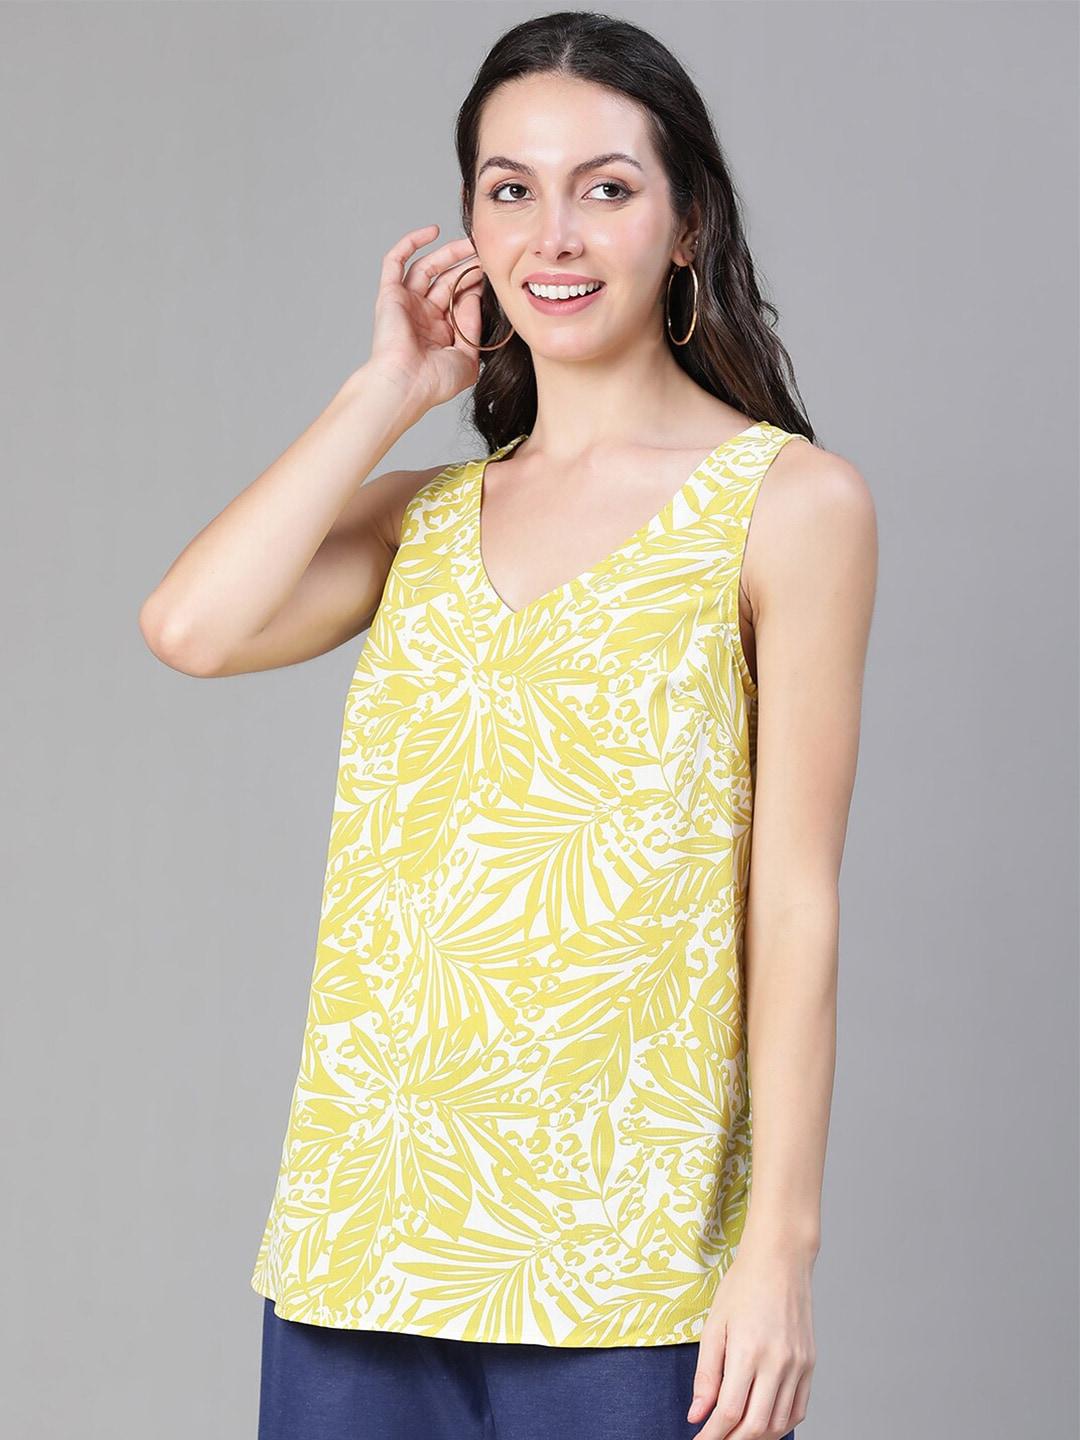 oxolloxo-floral-printed-sleeveless-v-neck-top